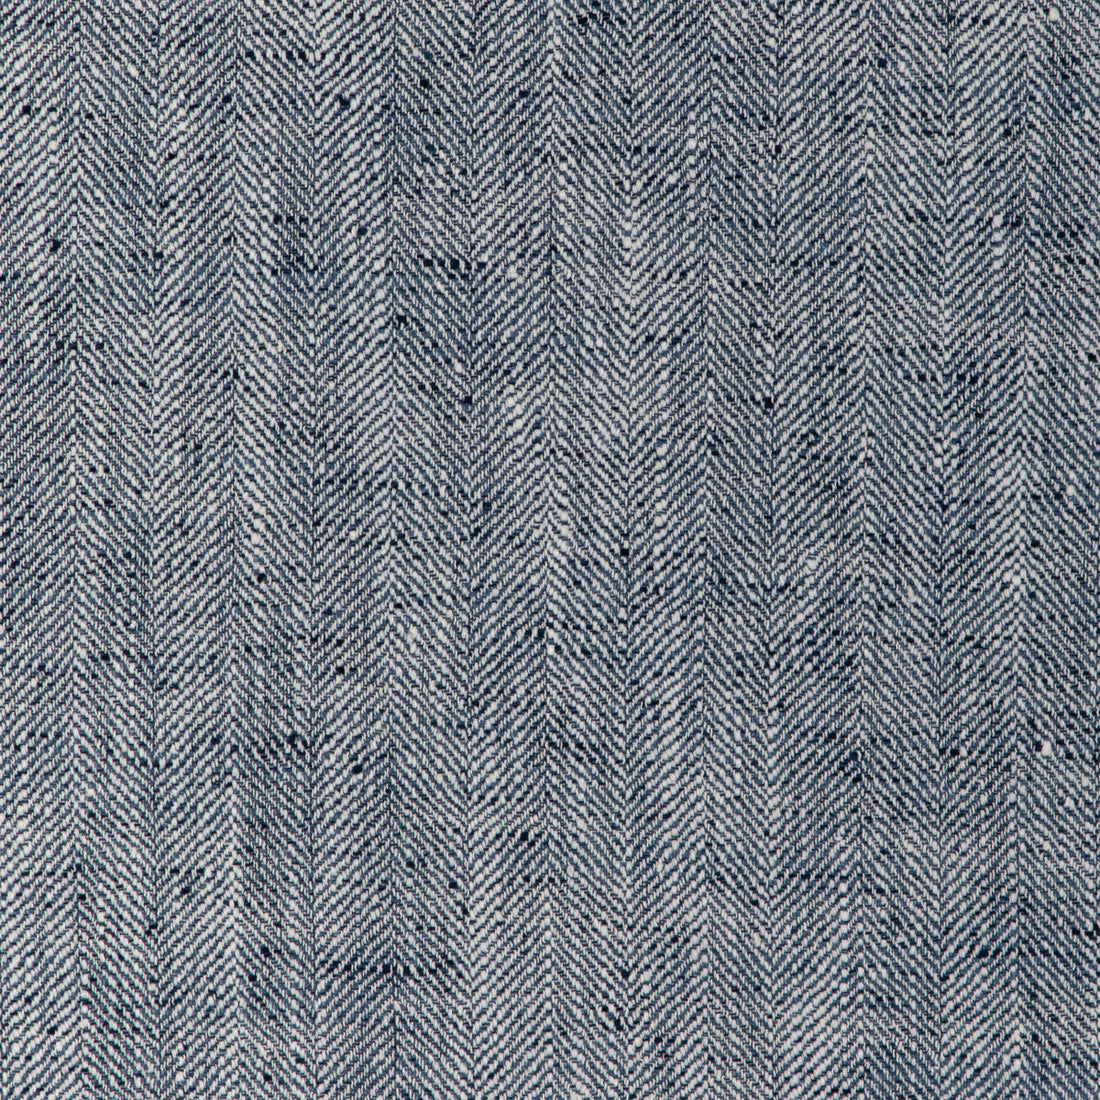 Kravet Smart fabric in 36674-51 color - pattern 36674.51.0 - by Kravet Smart in the Performance Kravetarmor collection